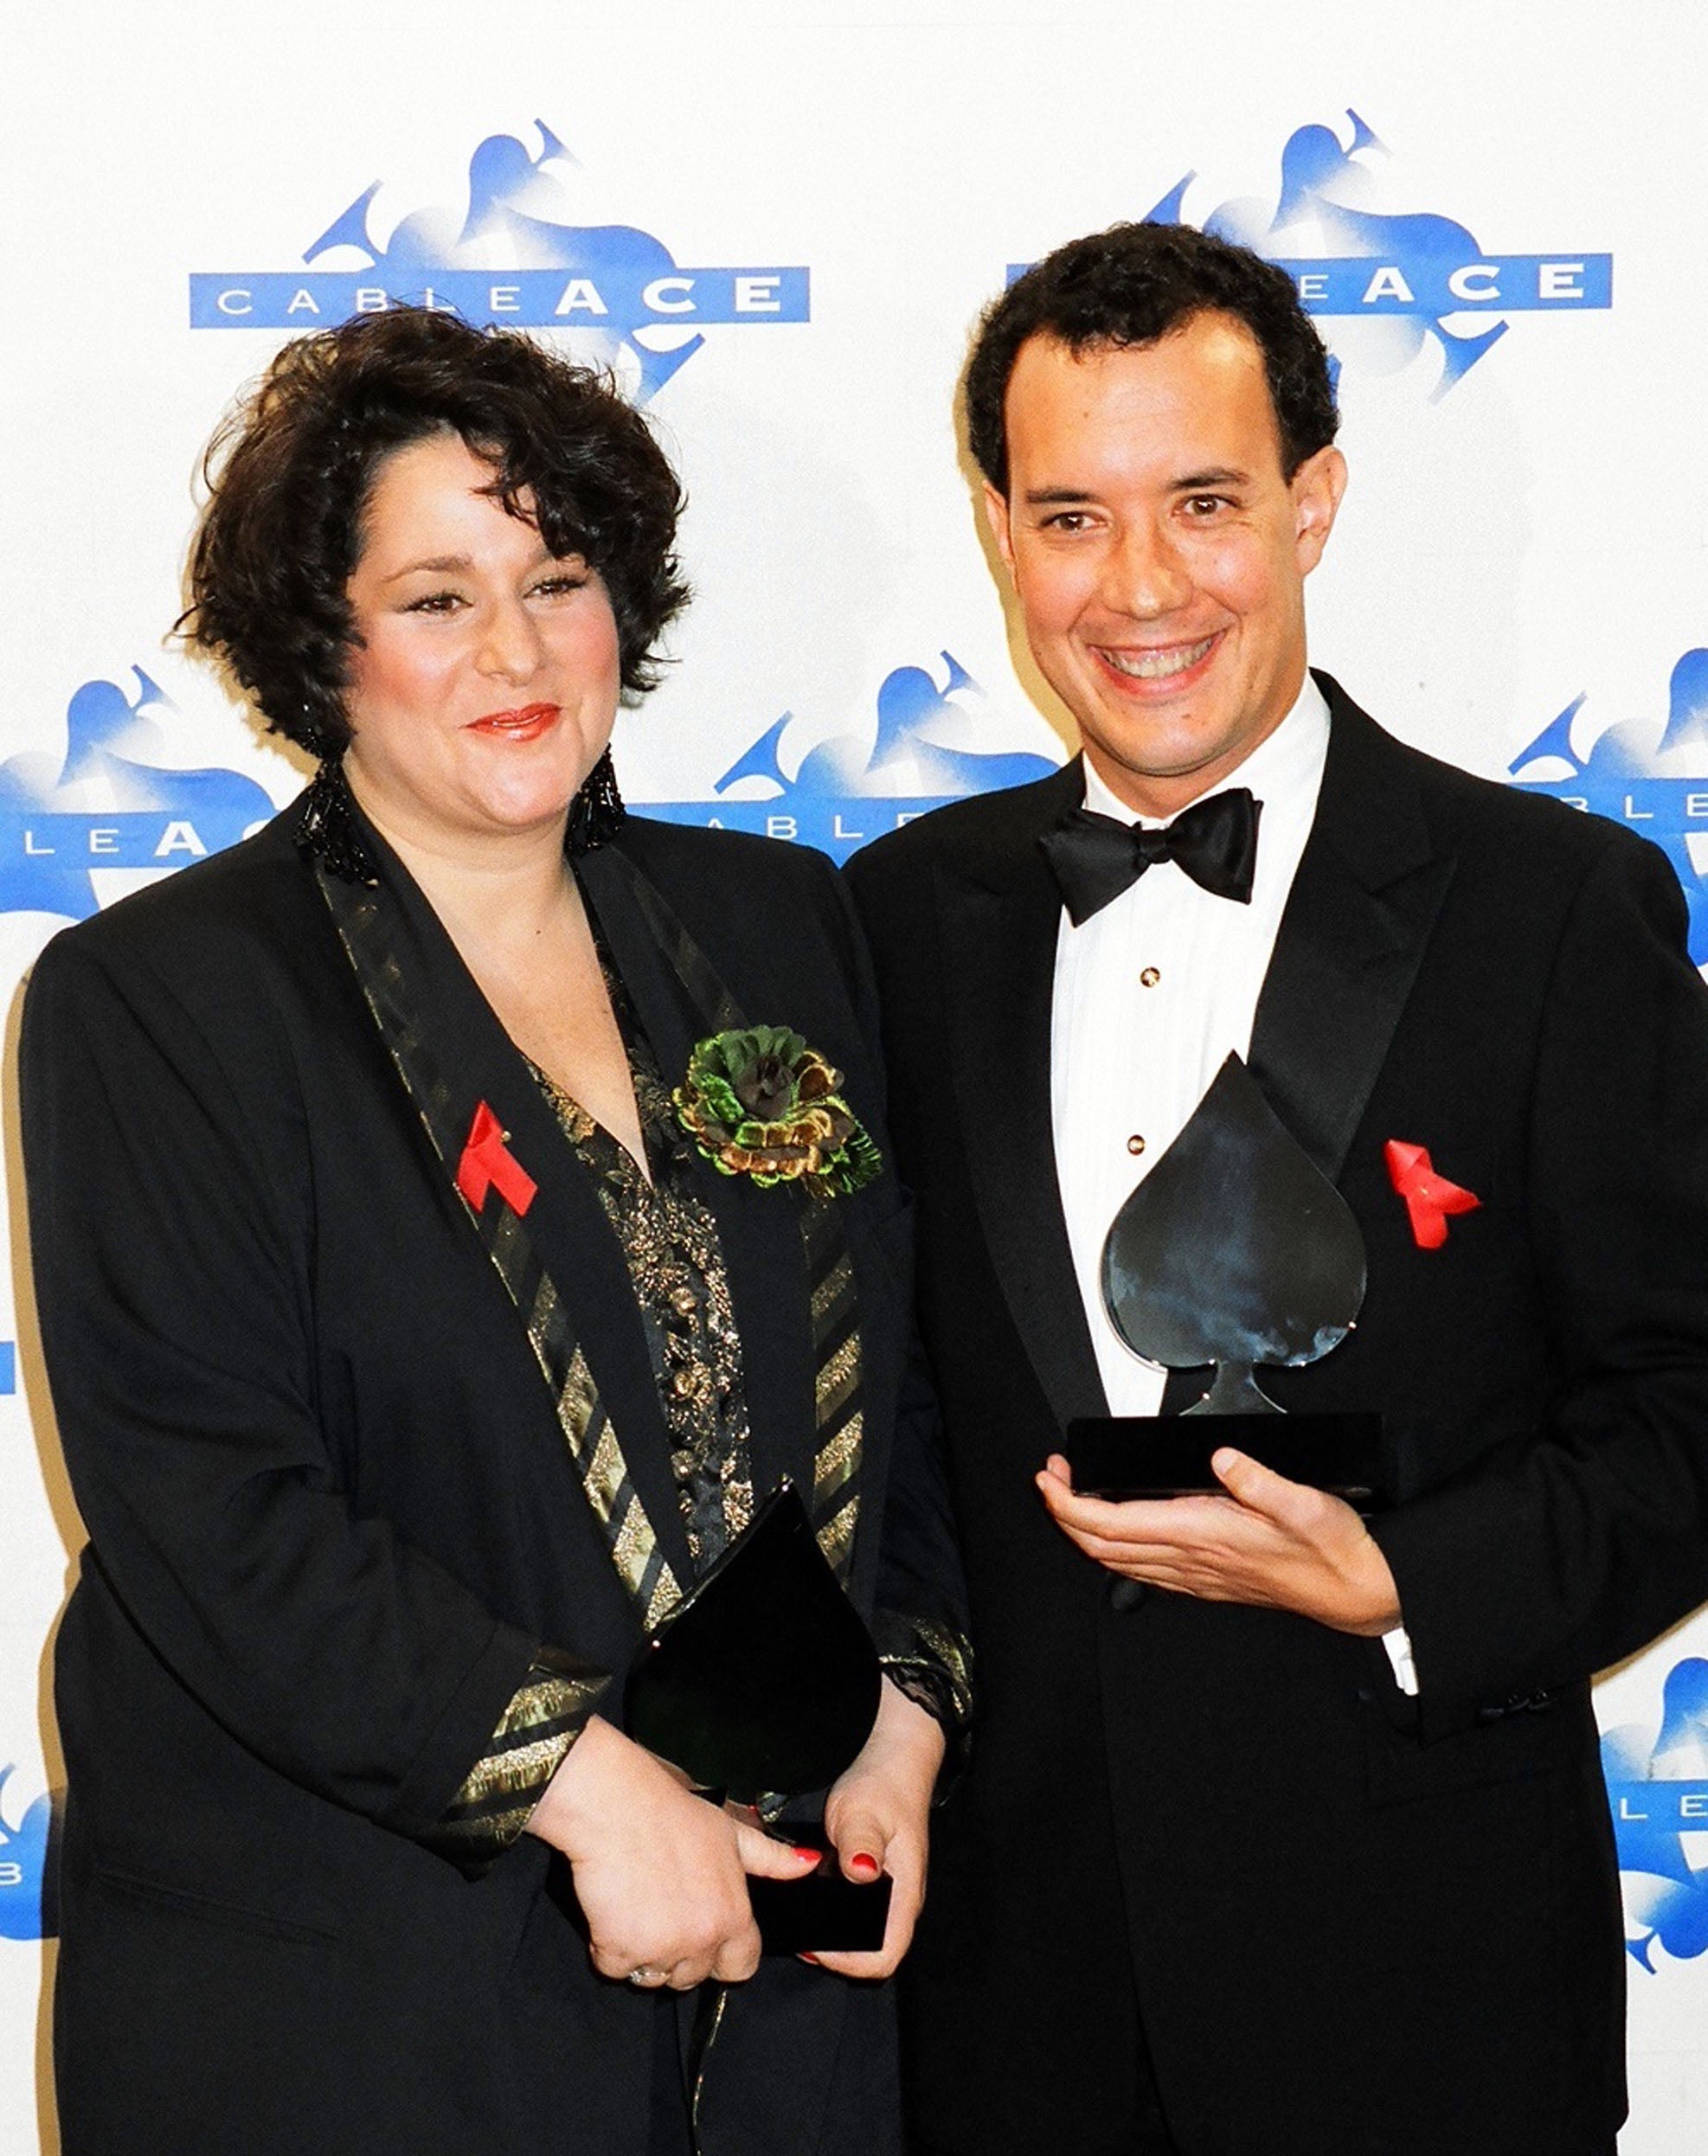 Marta Kauffman and David Crane at a media event holding awards